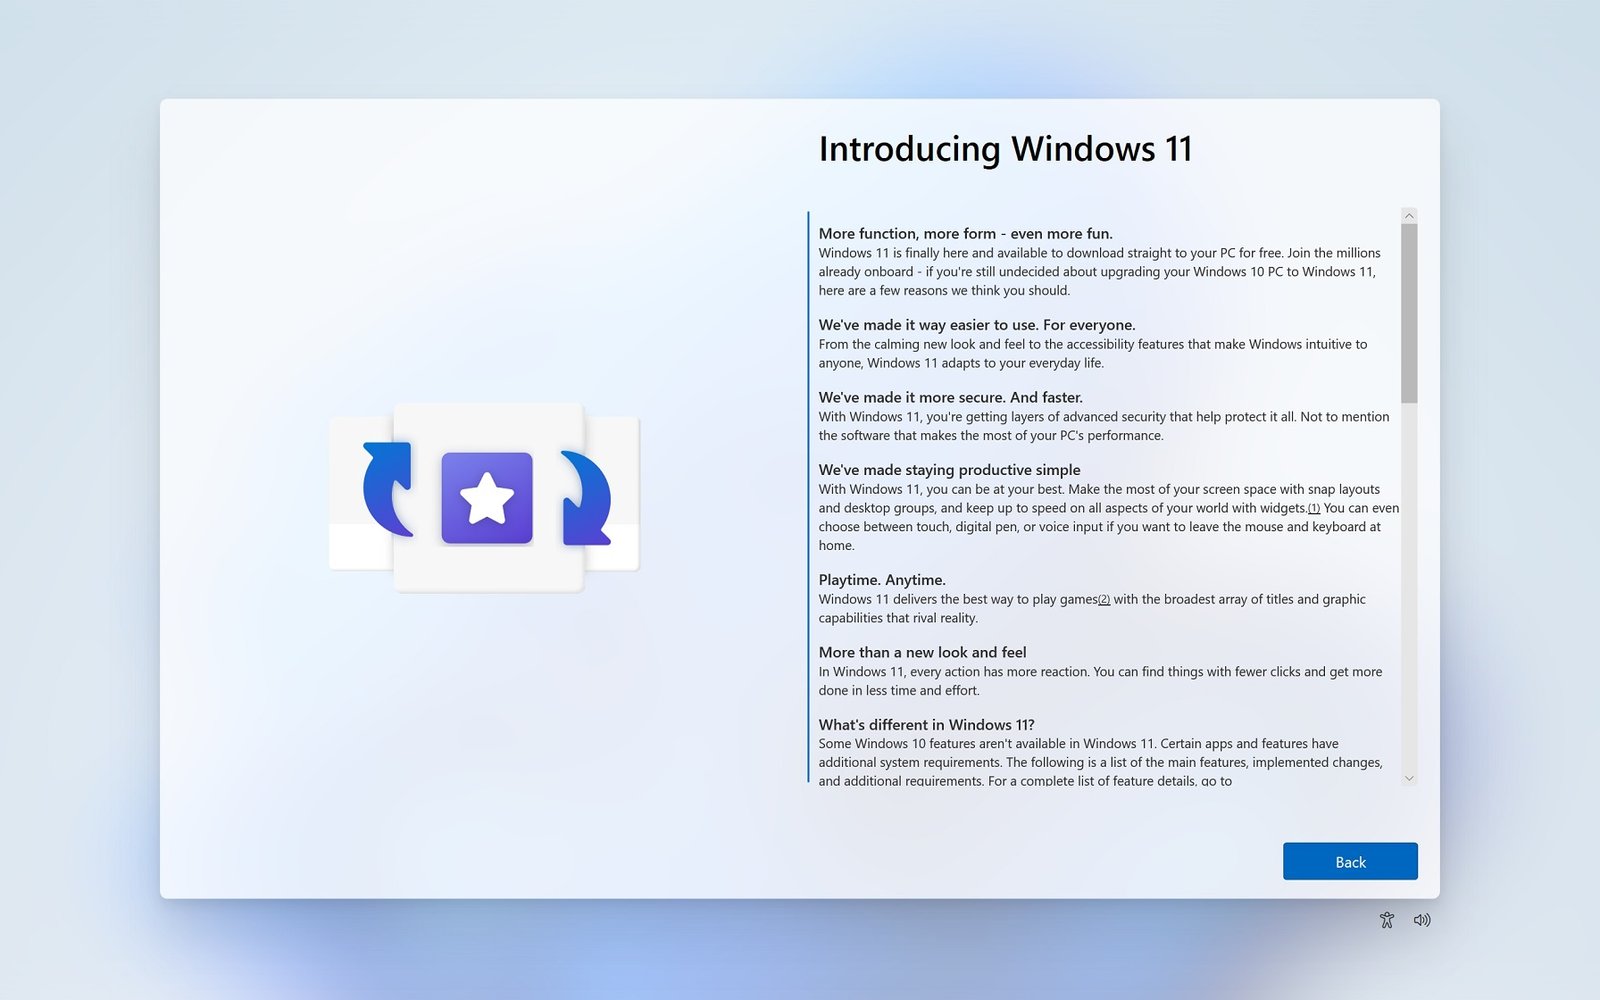 Actualizar a Windows 11: Microsoft Intensifica sus Esfuerzos con Ventanas Emergentes